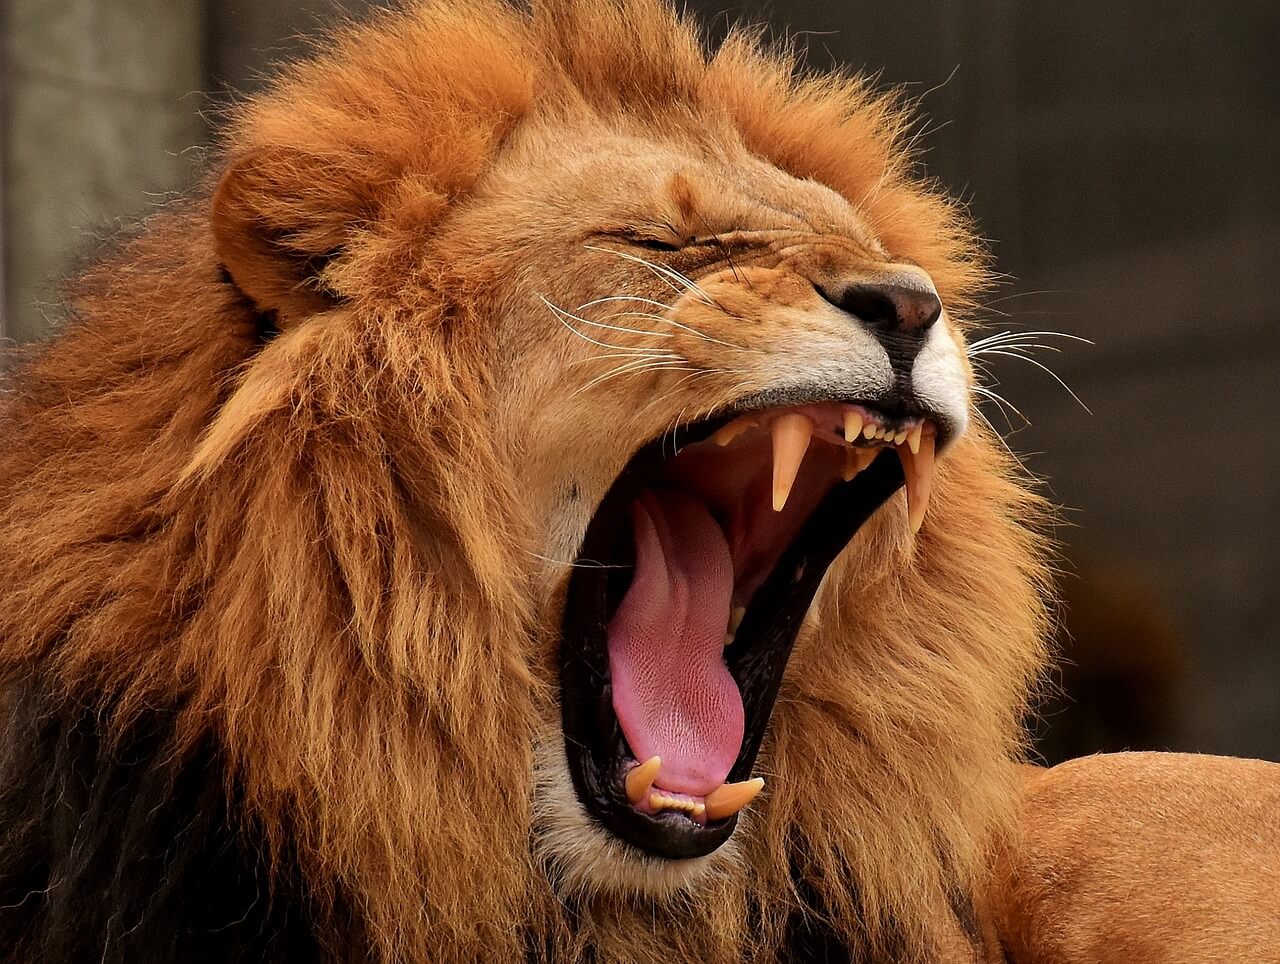 lion roaring, yawning, angry expression, captive